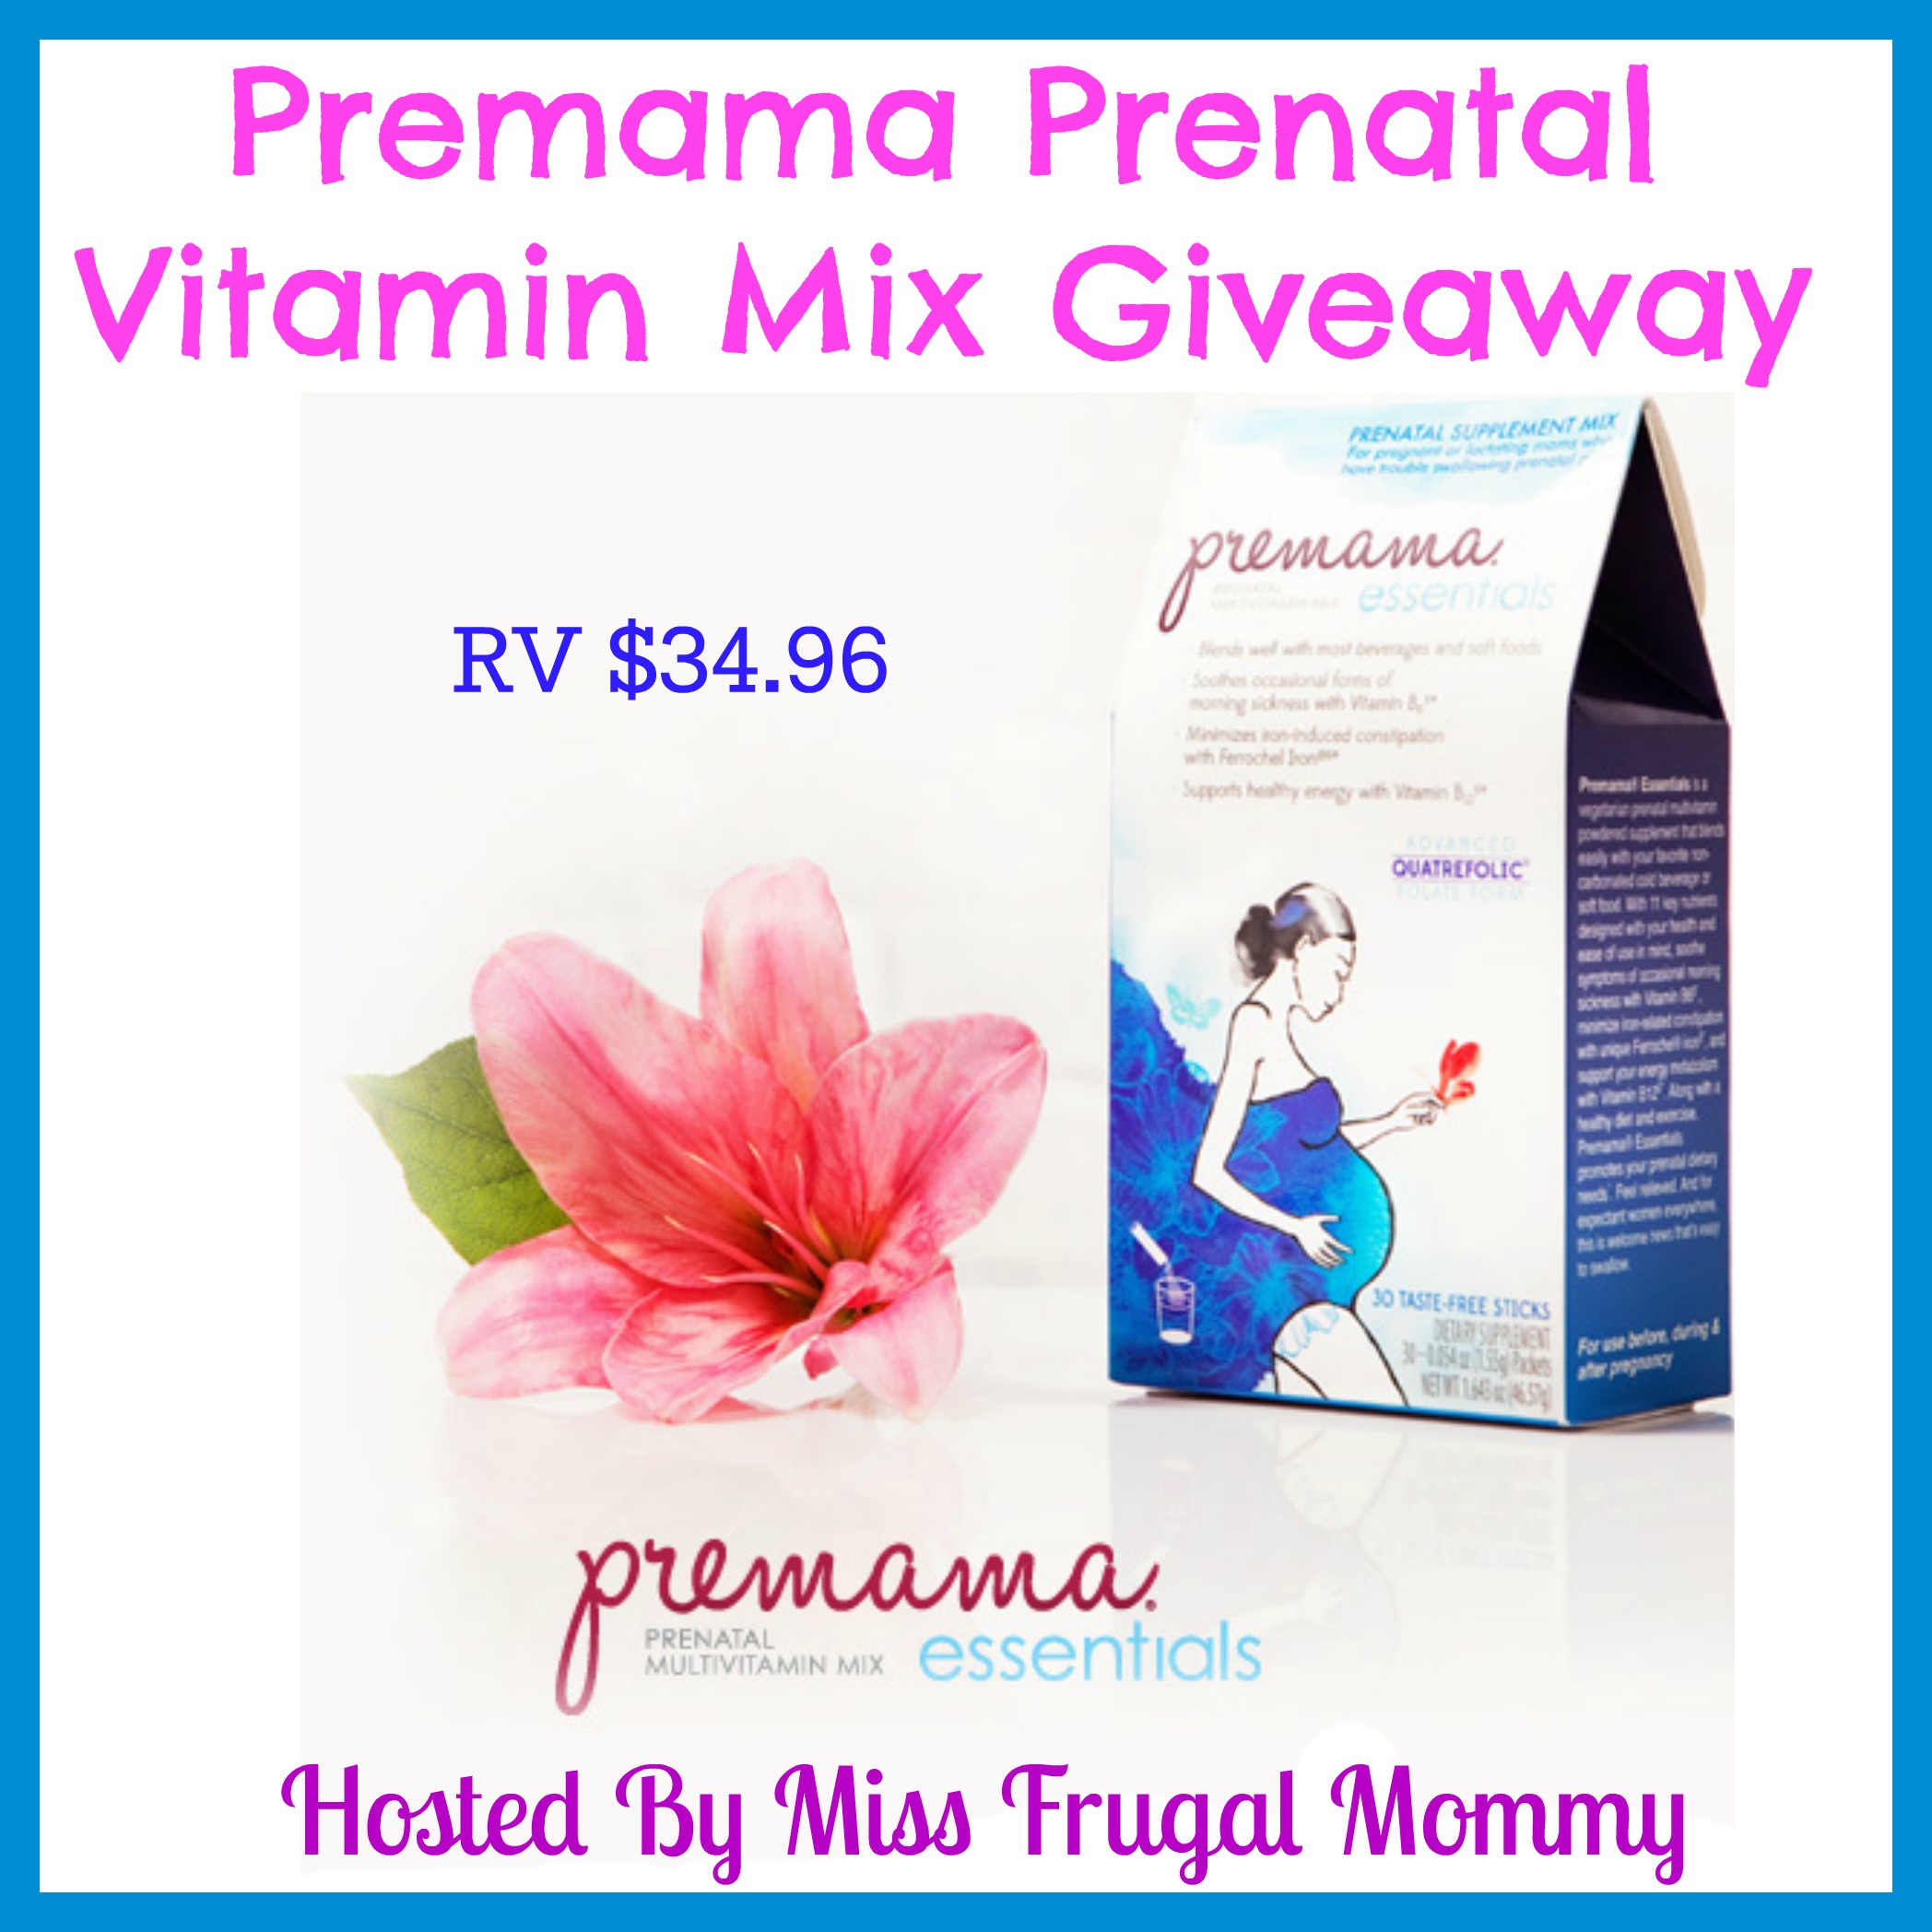 Premama Prenatal Vitamin Mix Giveaway